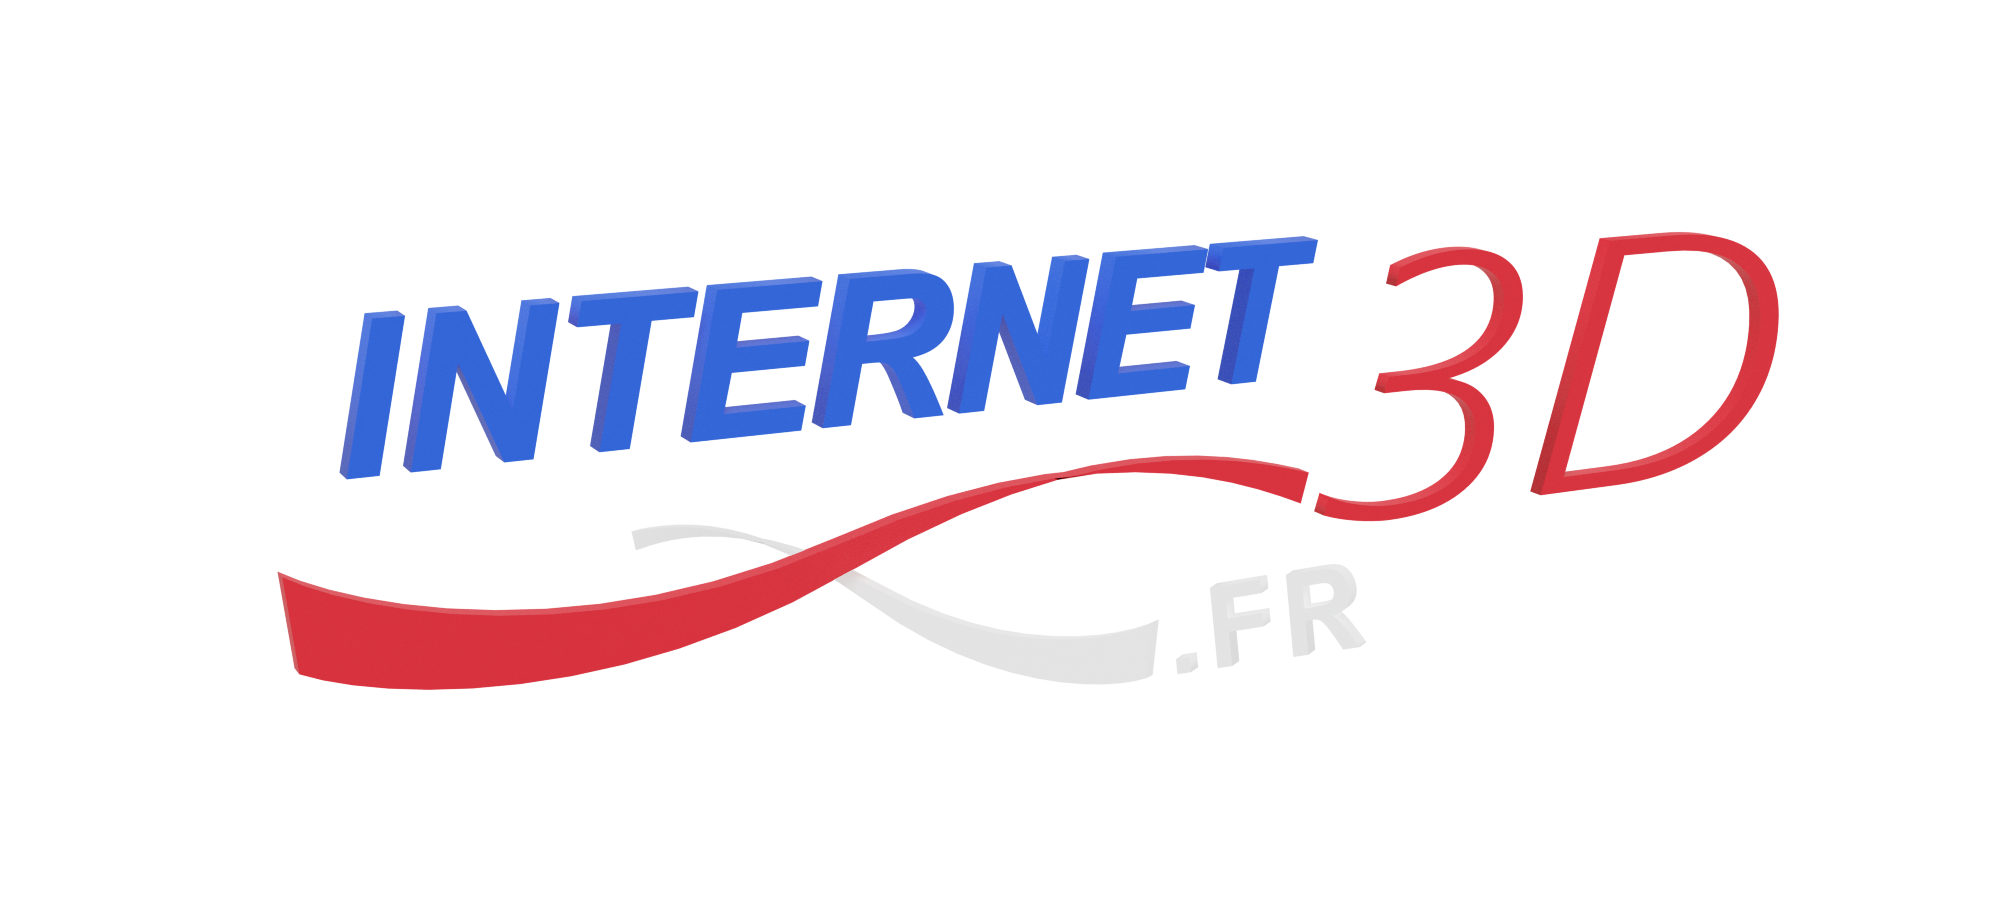 Logo du site Internet3d.fr